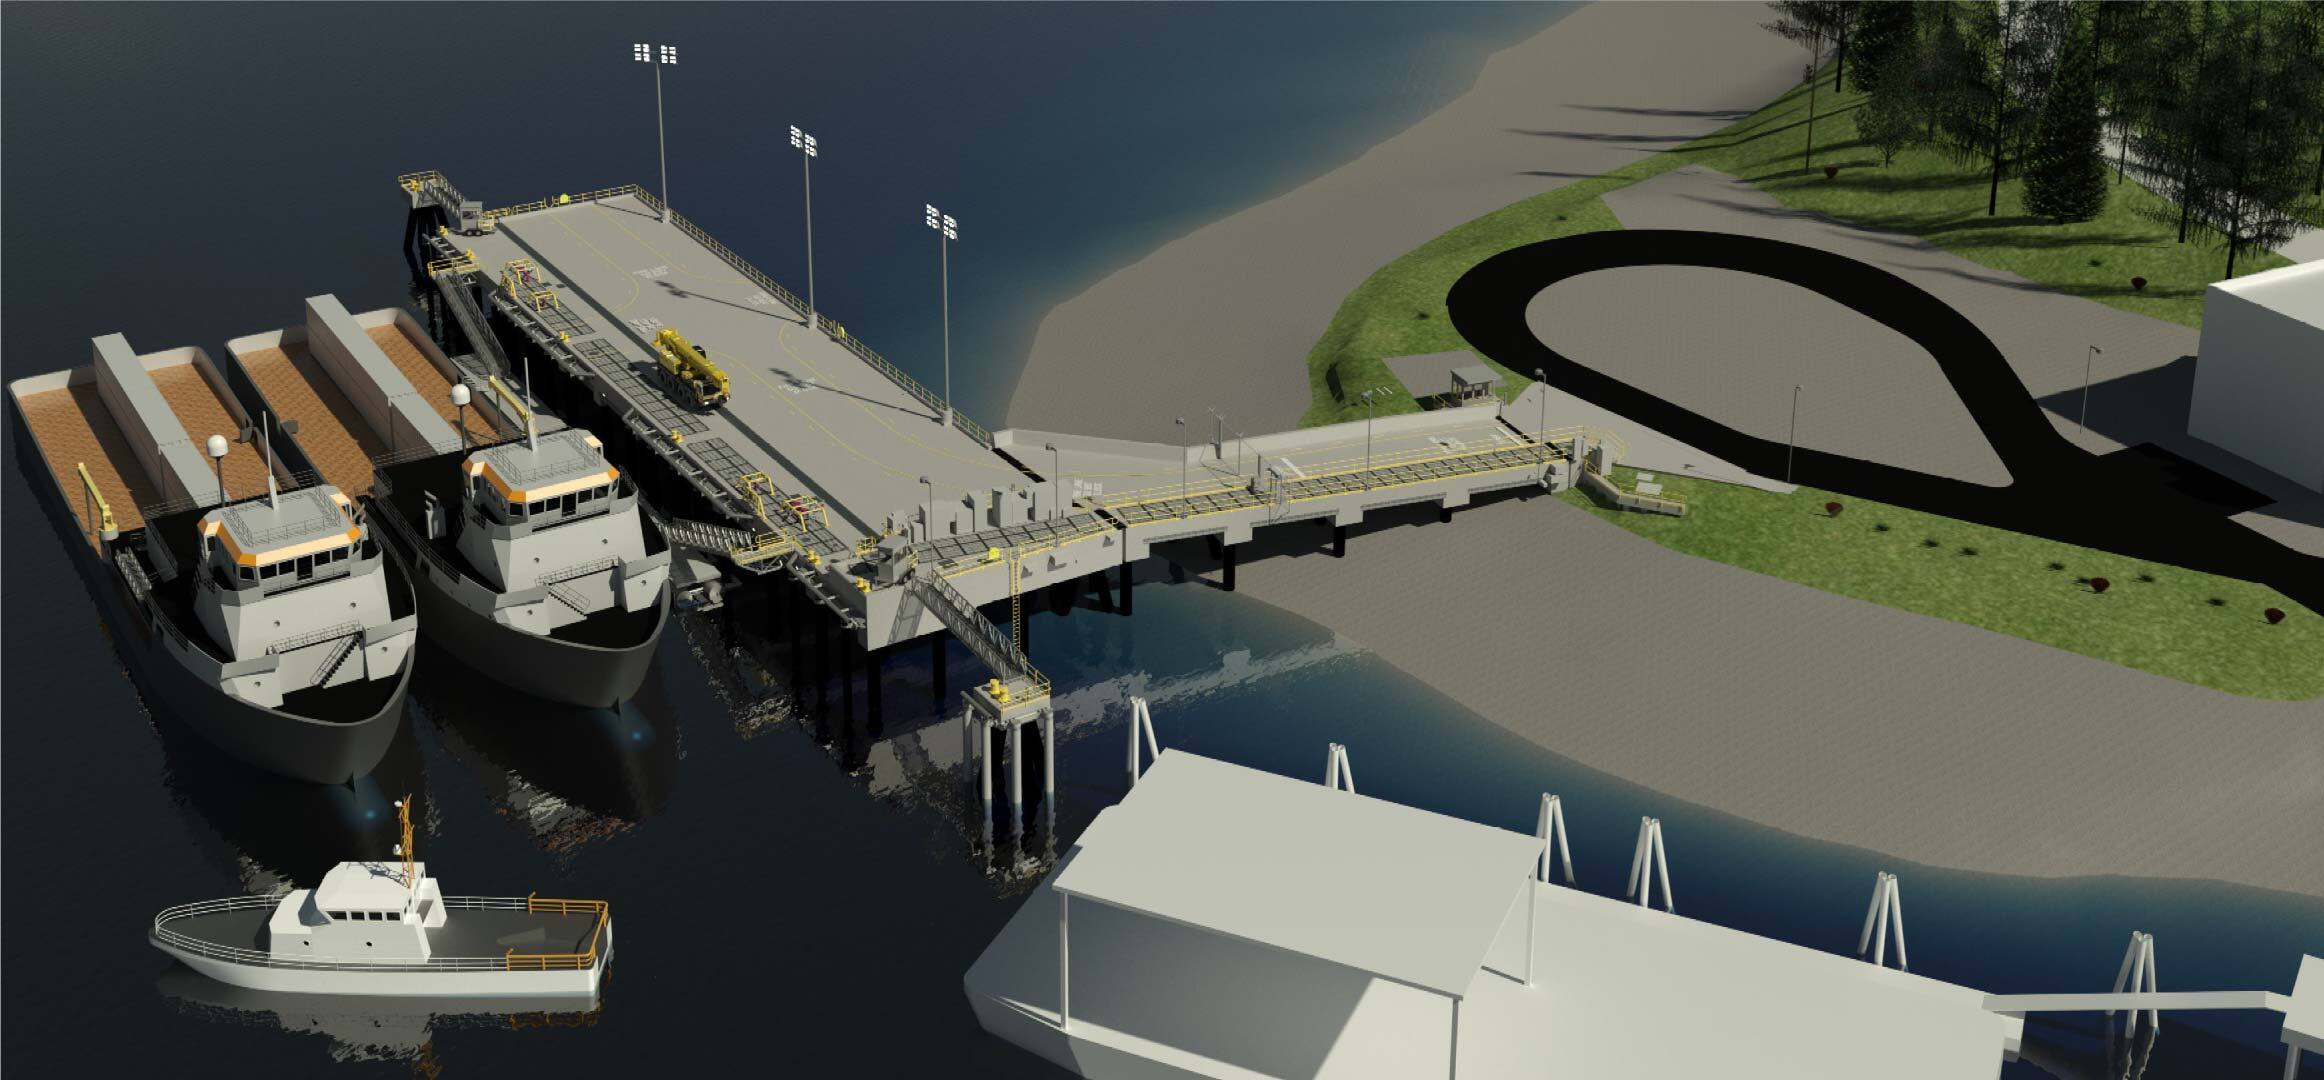 Naval Base Kitsap – Bangor, P-907 Transit Protection Program Pier and Maintenance Facility